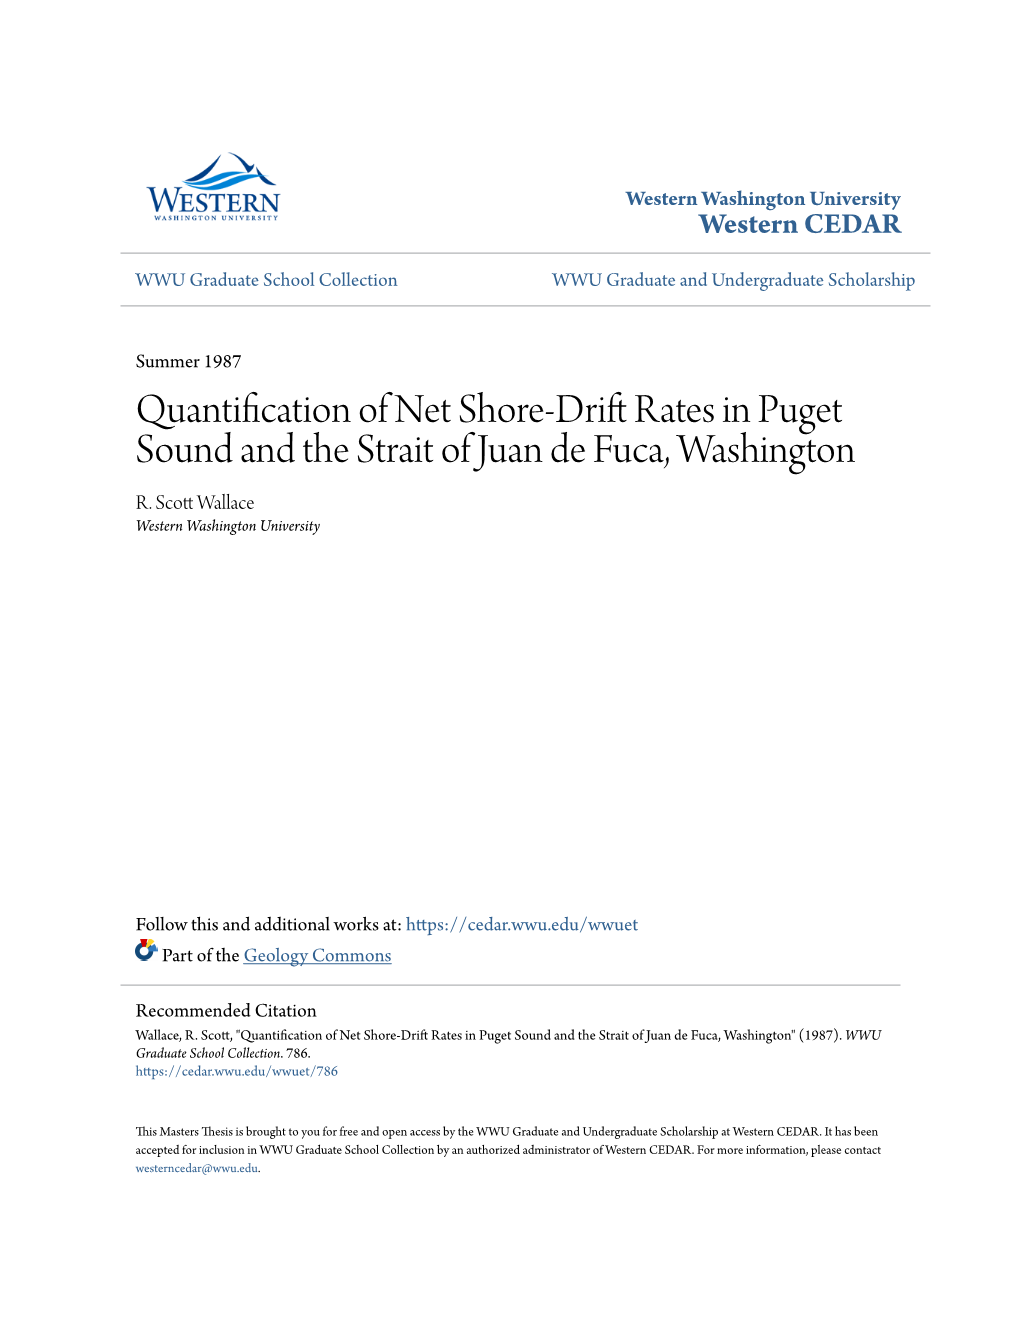 Quantification of Net Shore-Drift Rates in Puget Sound and the Strait of Juan De Fuca, Washington R